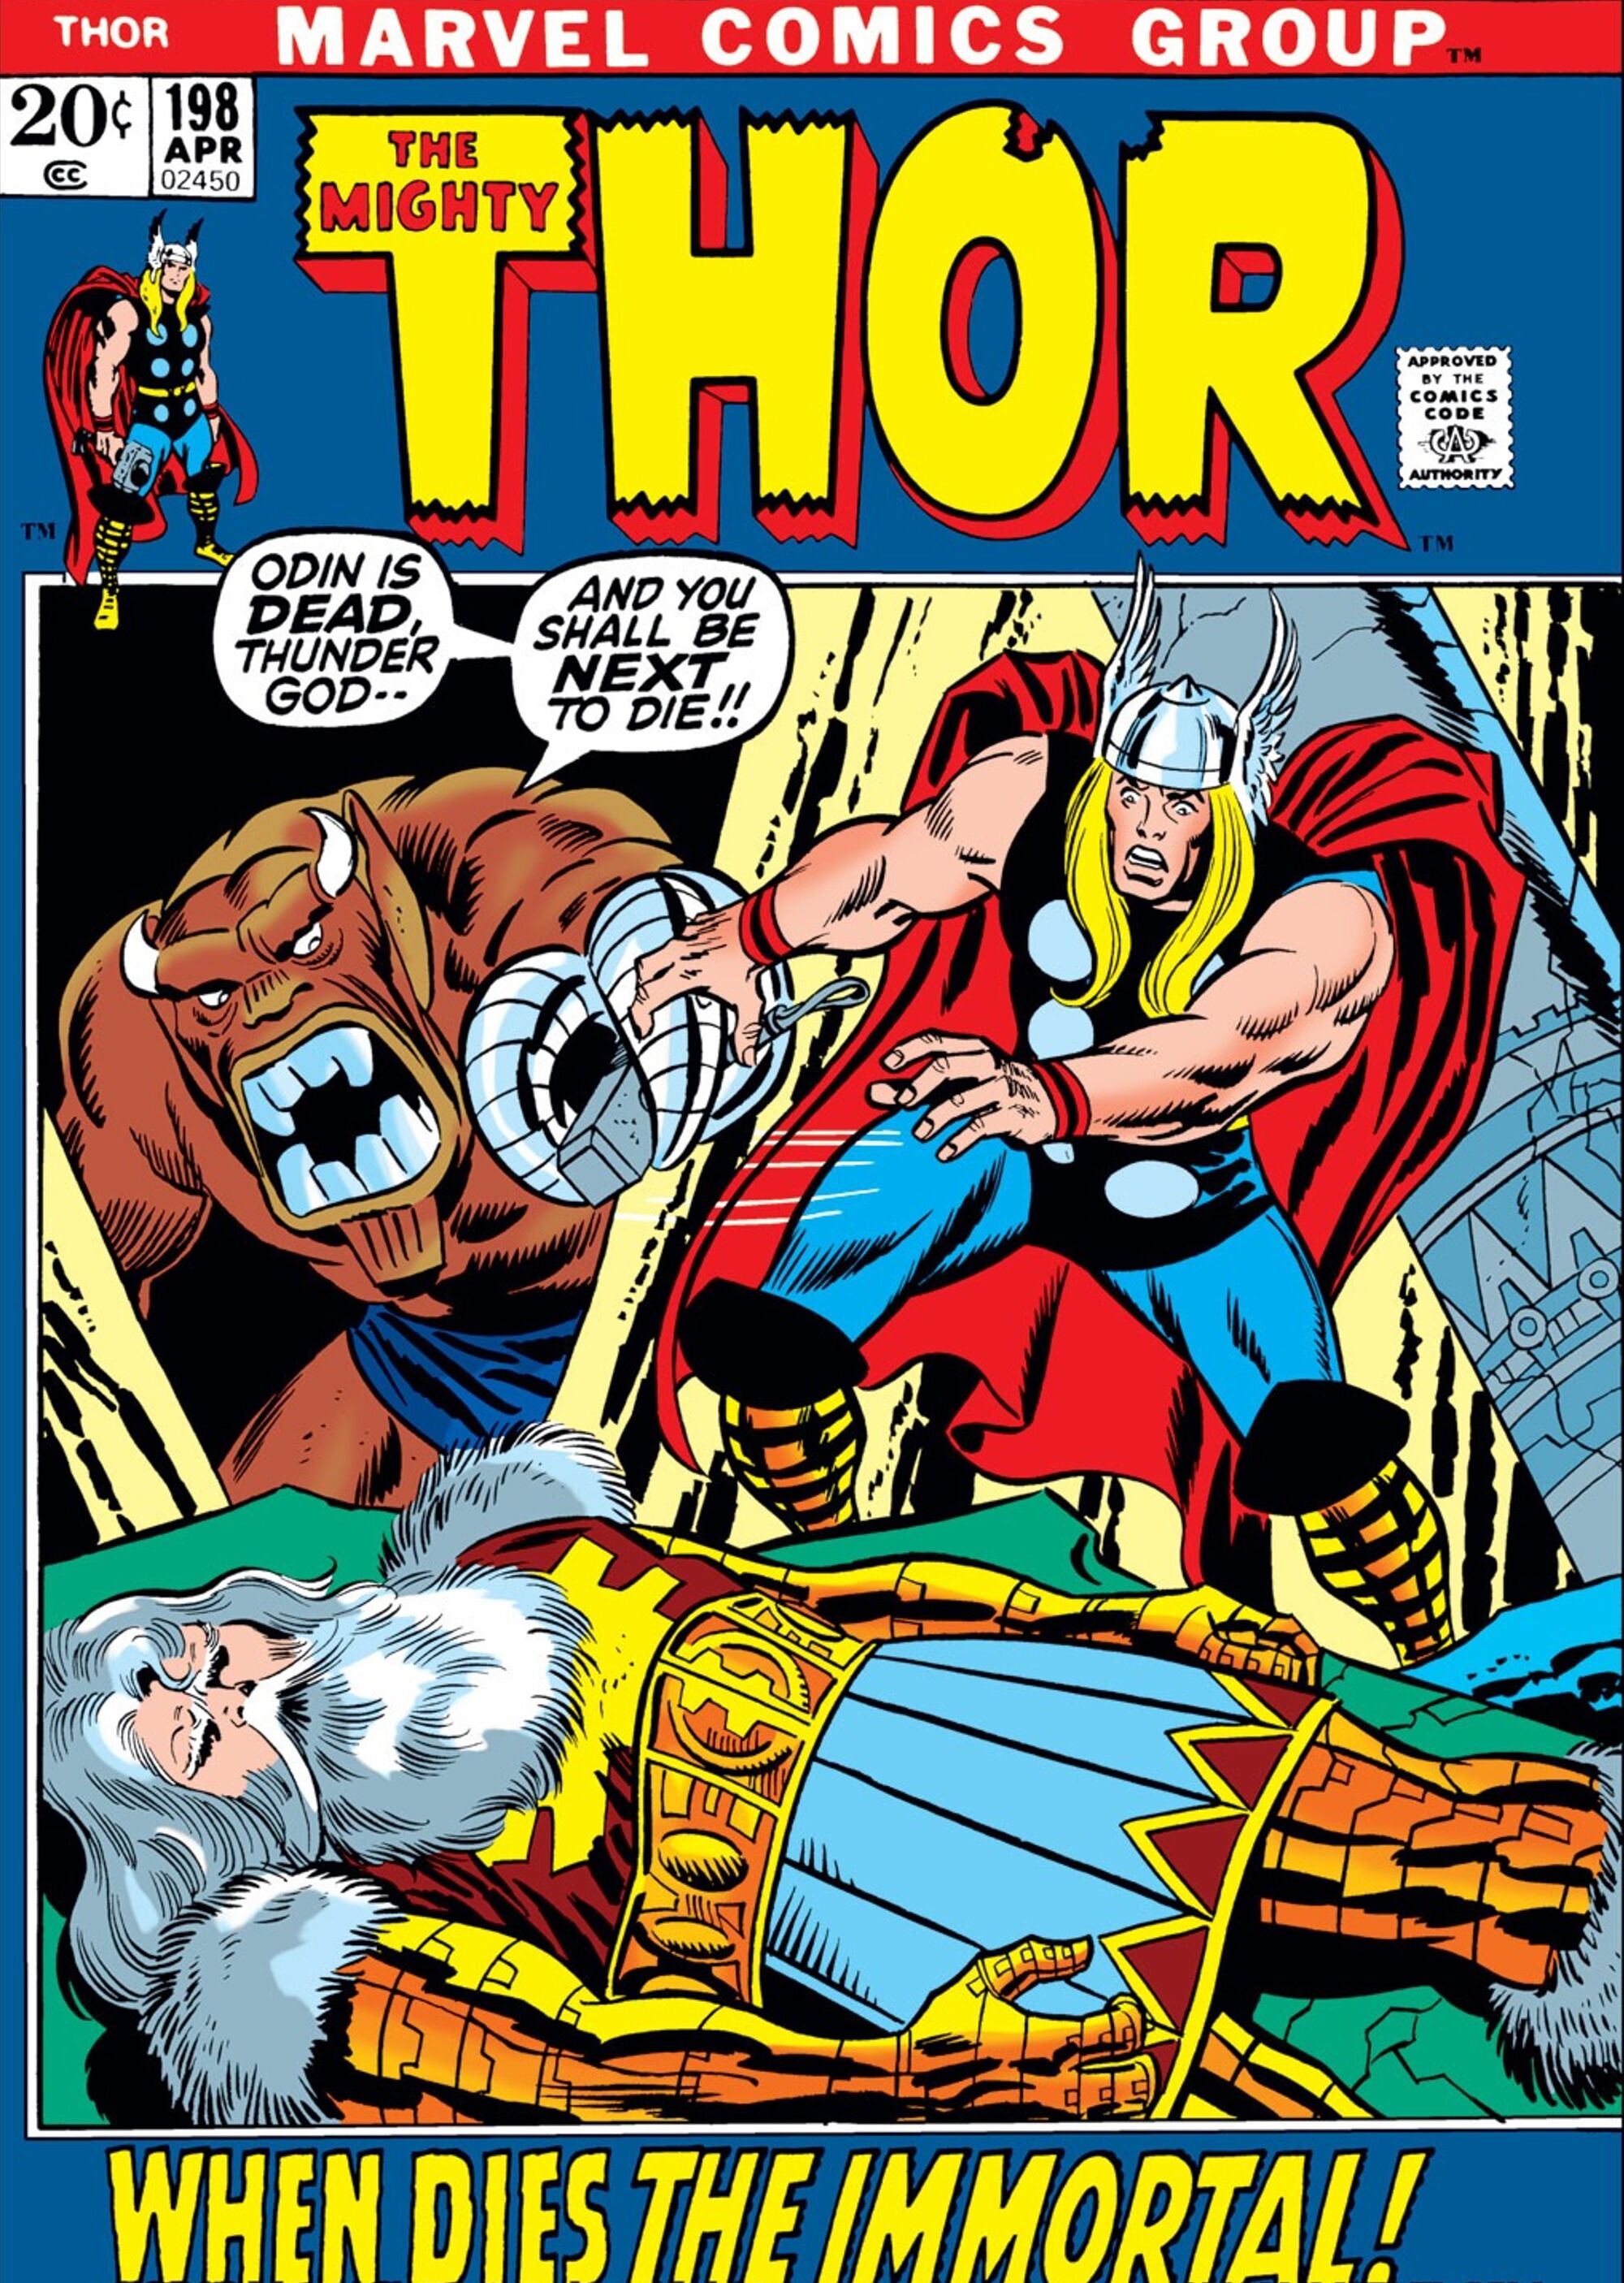 Thor Vol 1 198 | Marvel Database | Fandom